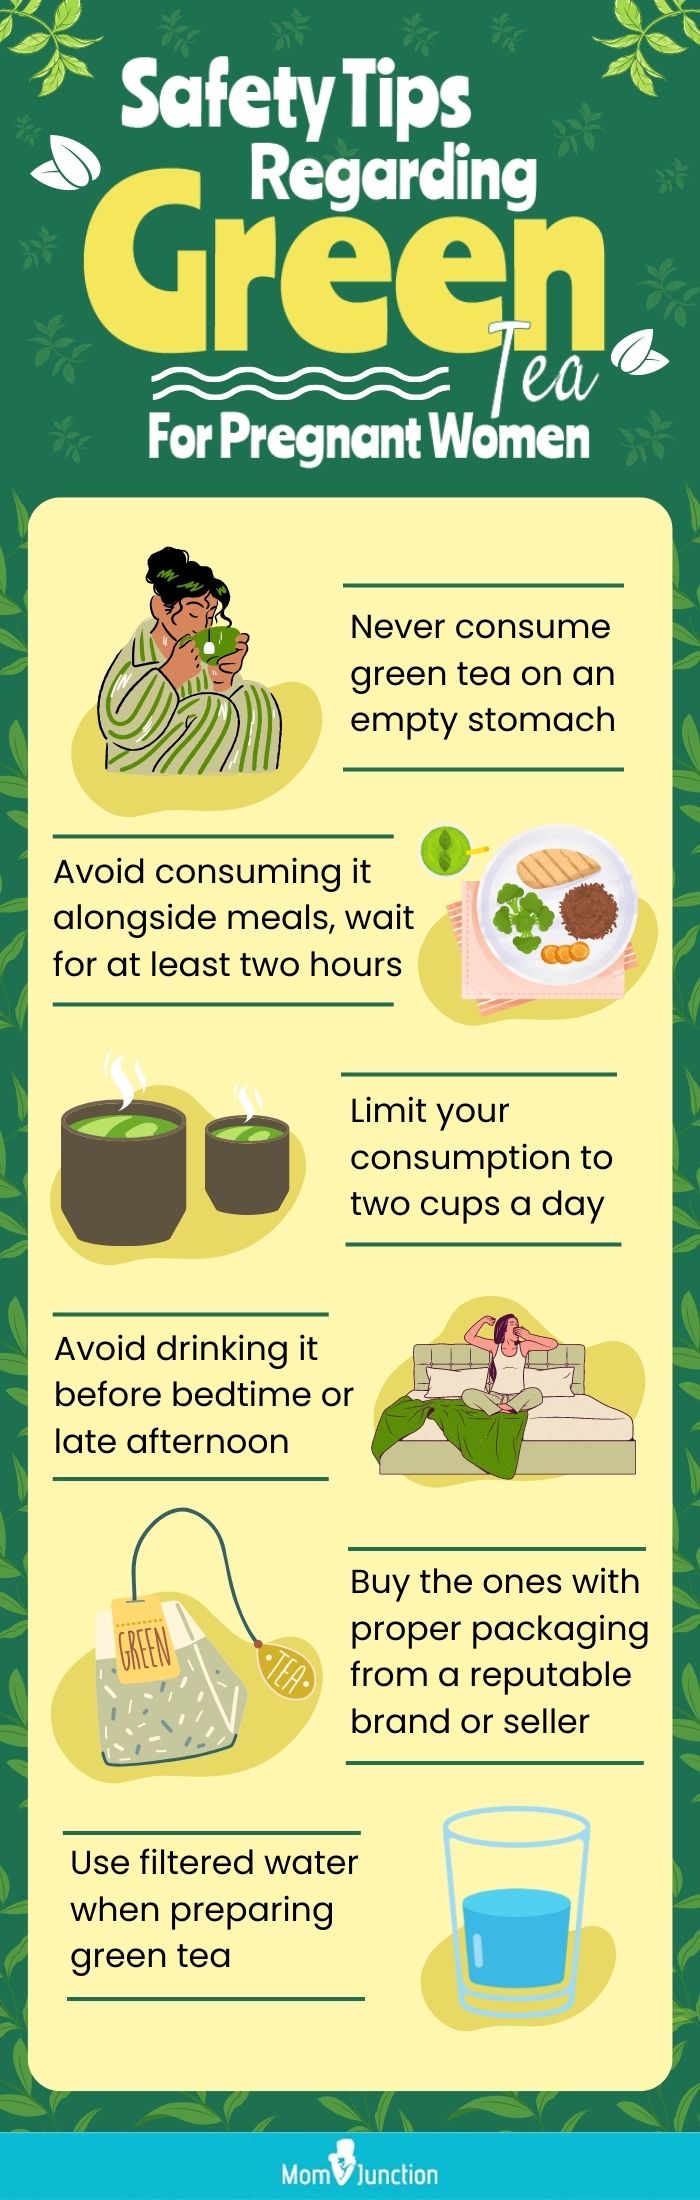 safety tips regarding green tea for pregnant women (infographic)